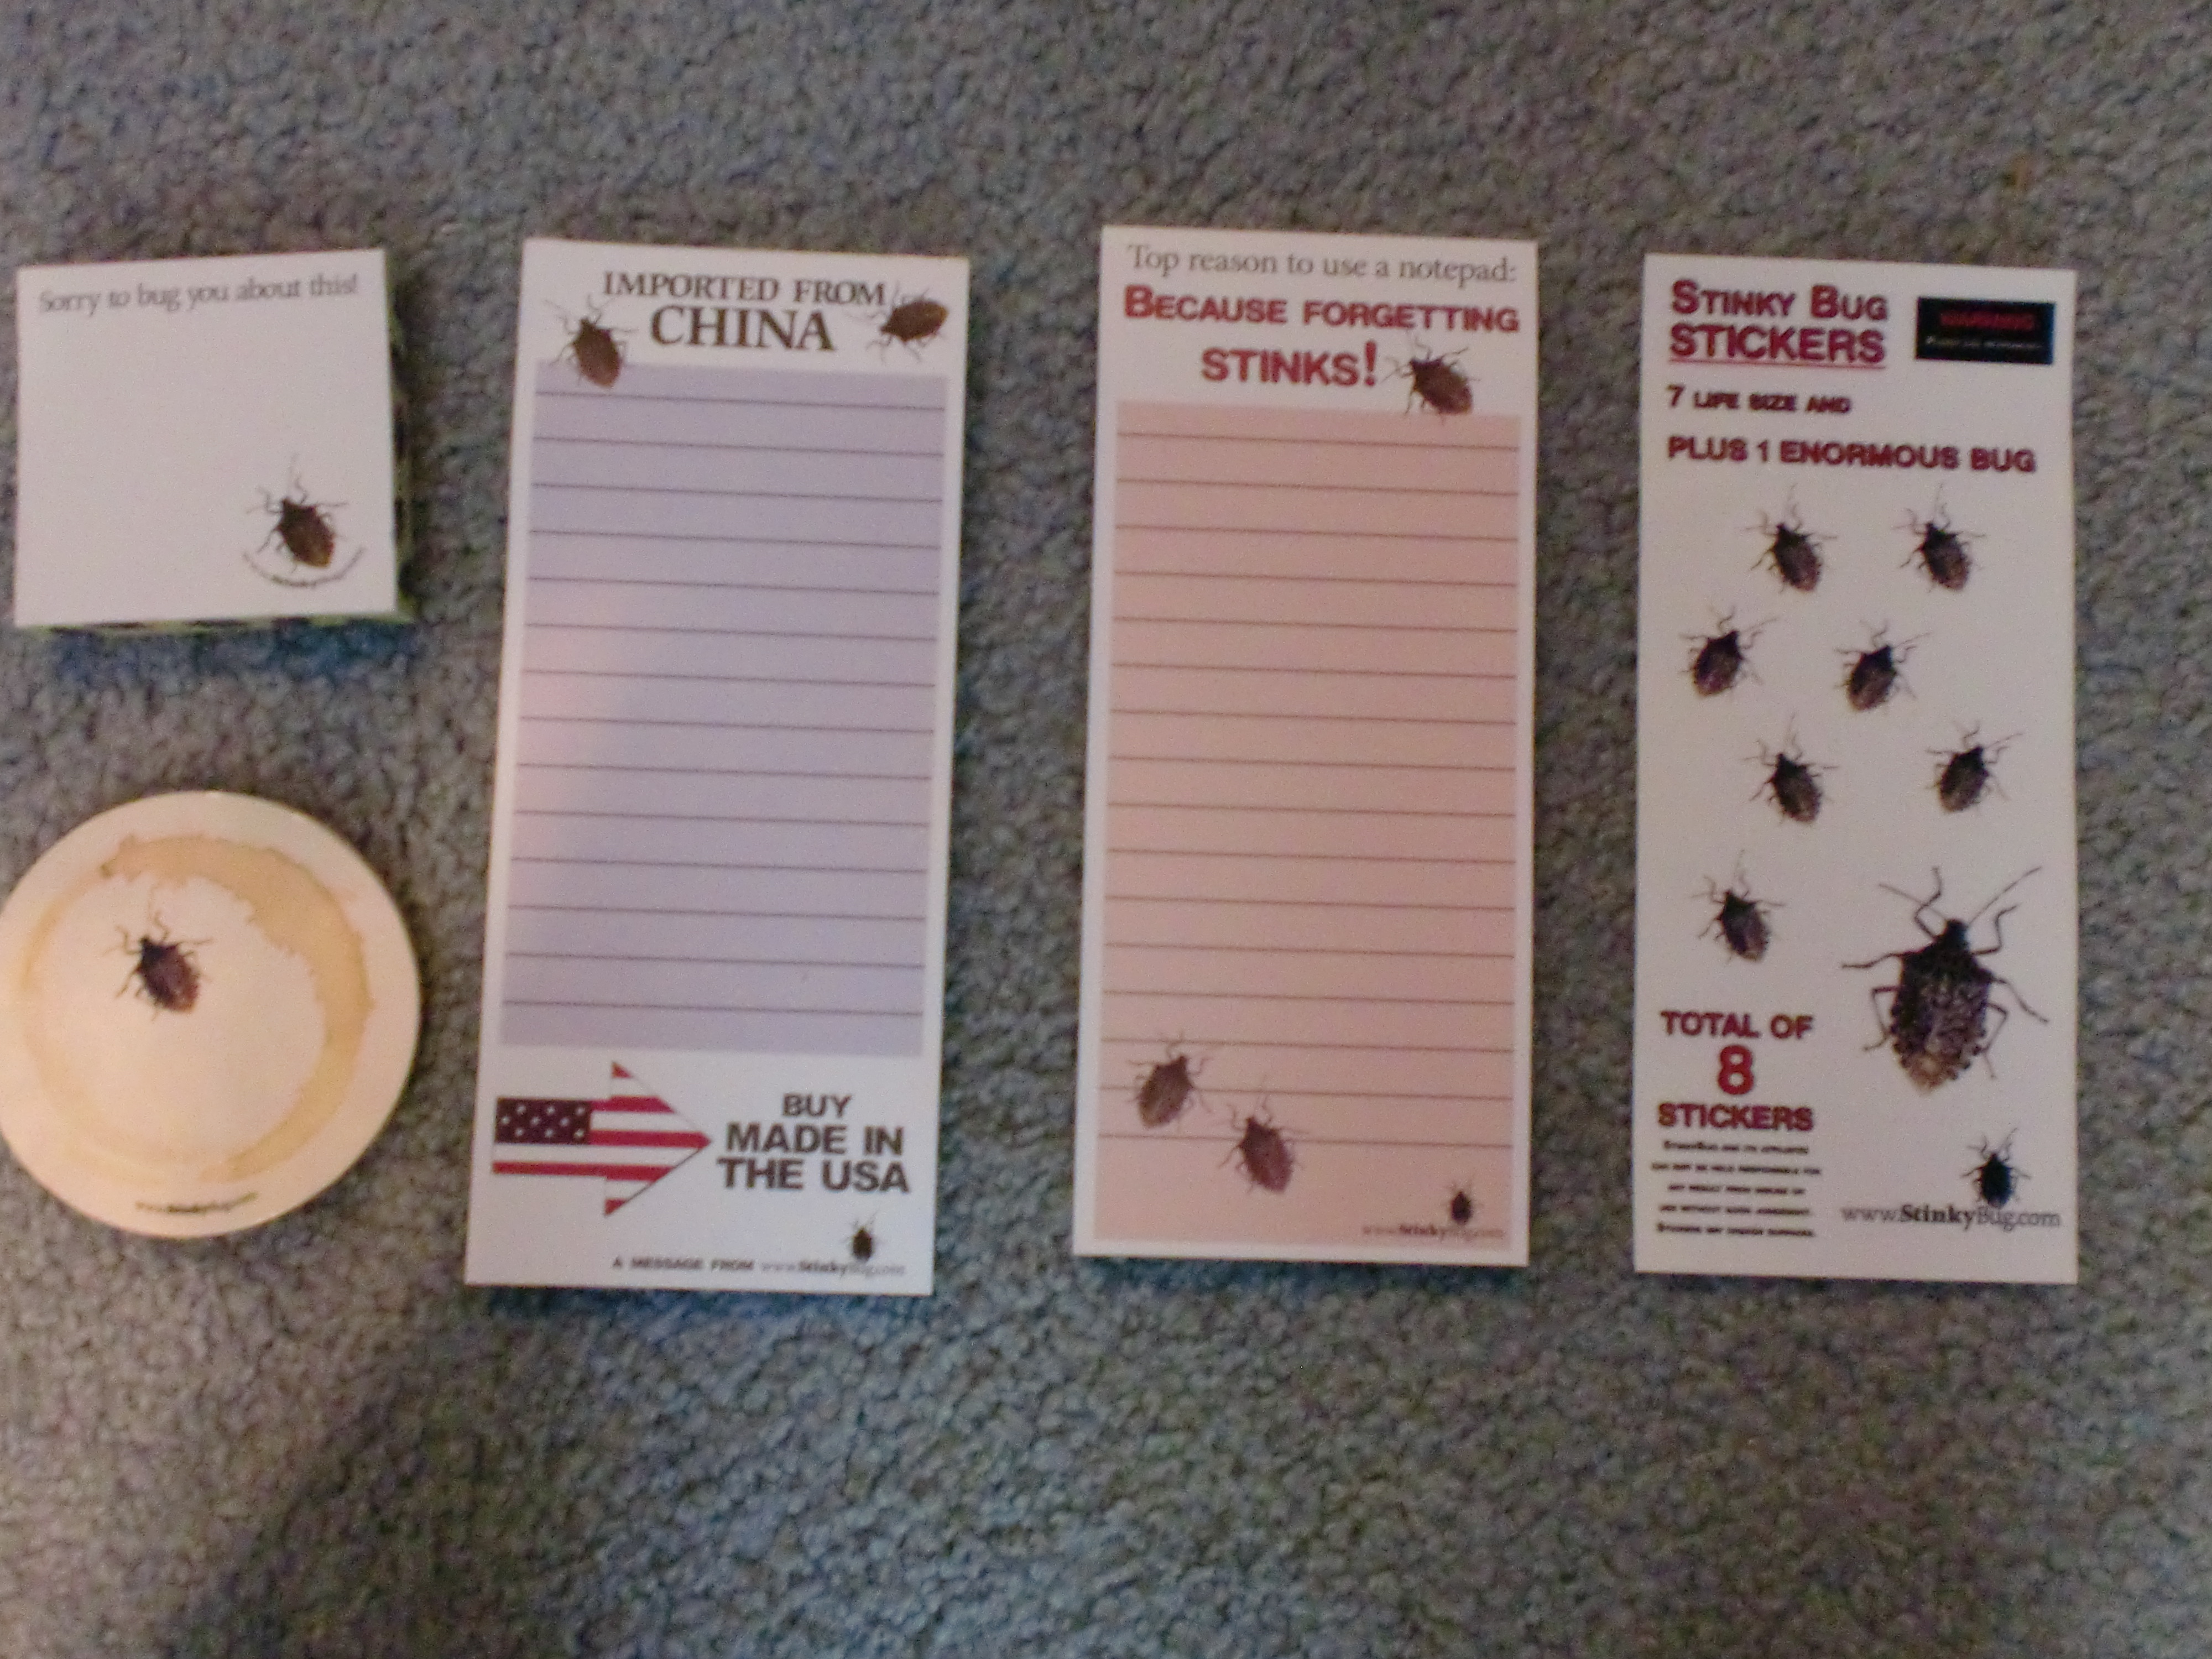 Stinkbug humor adorns notepads and coasters.